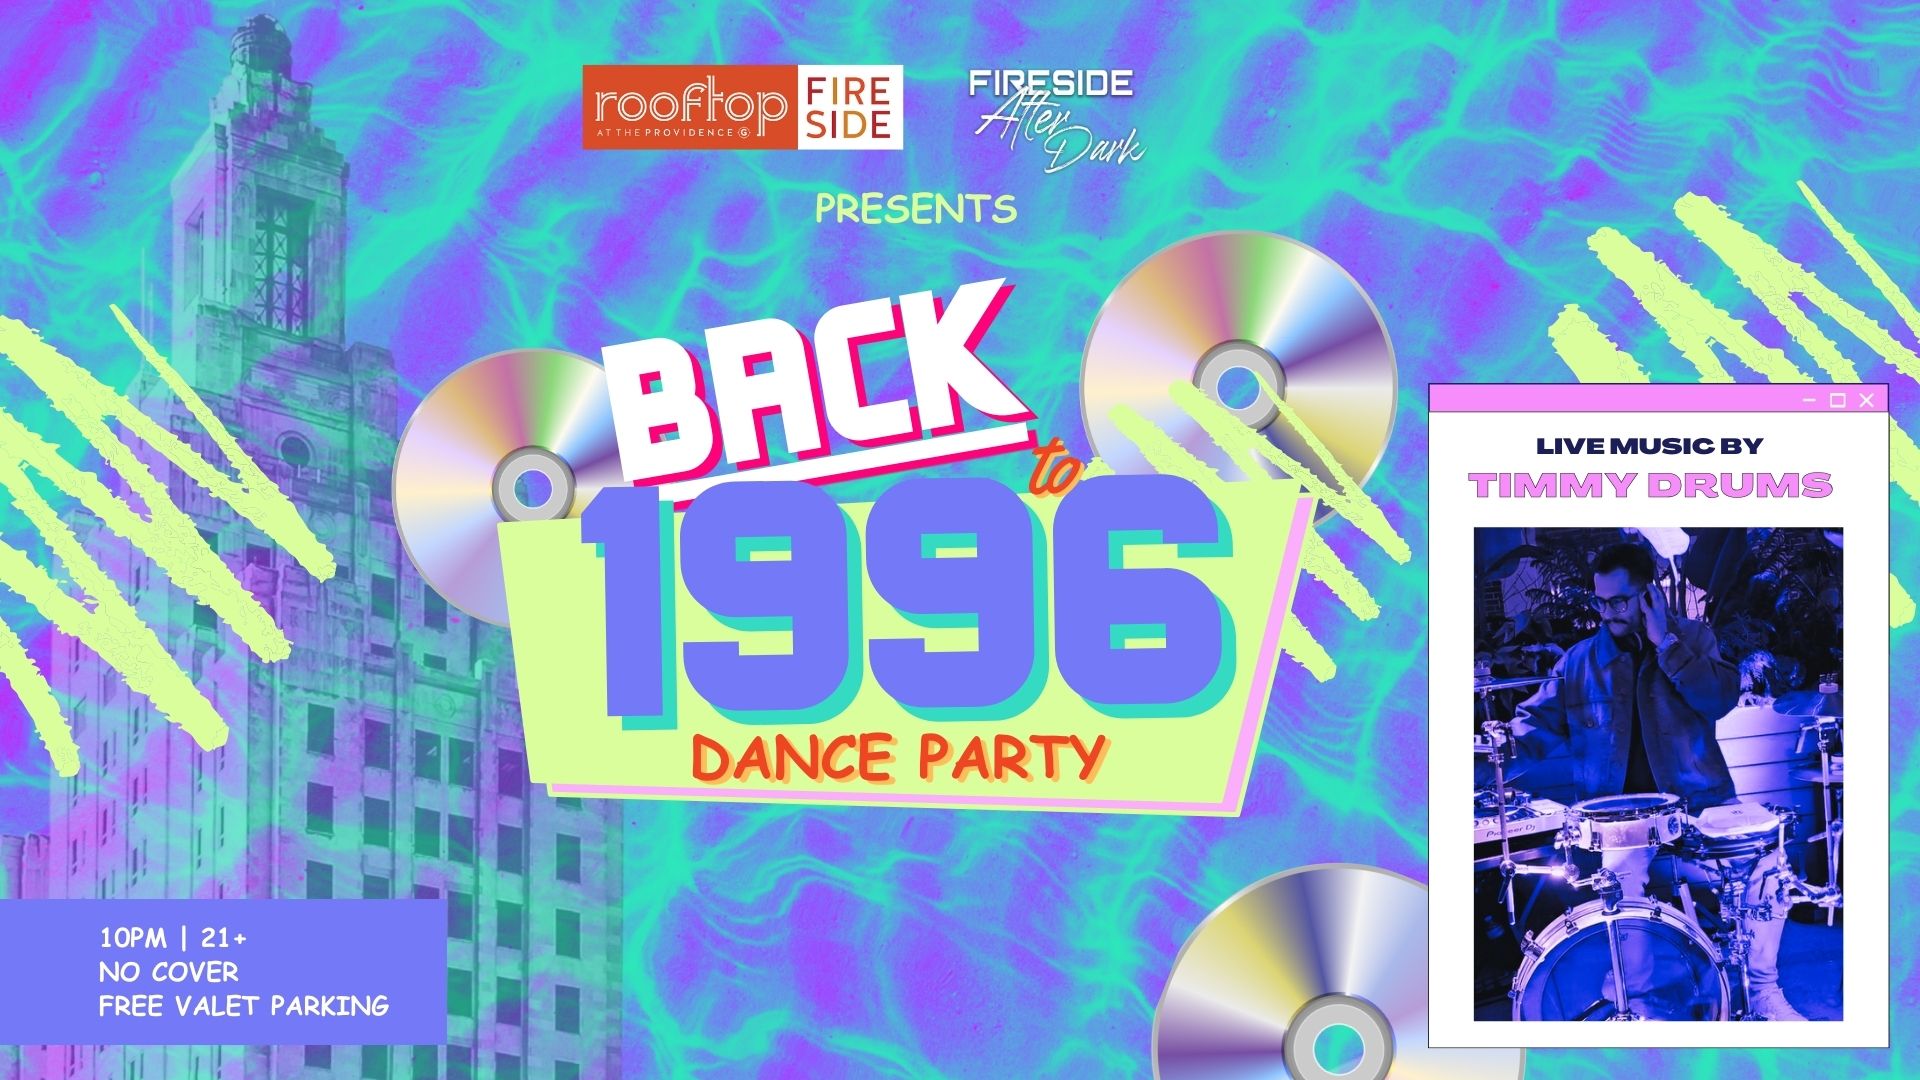 Rush - 1996 Dance Party